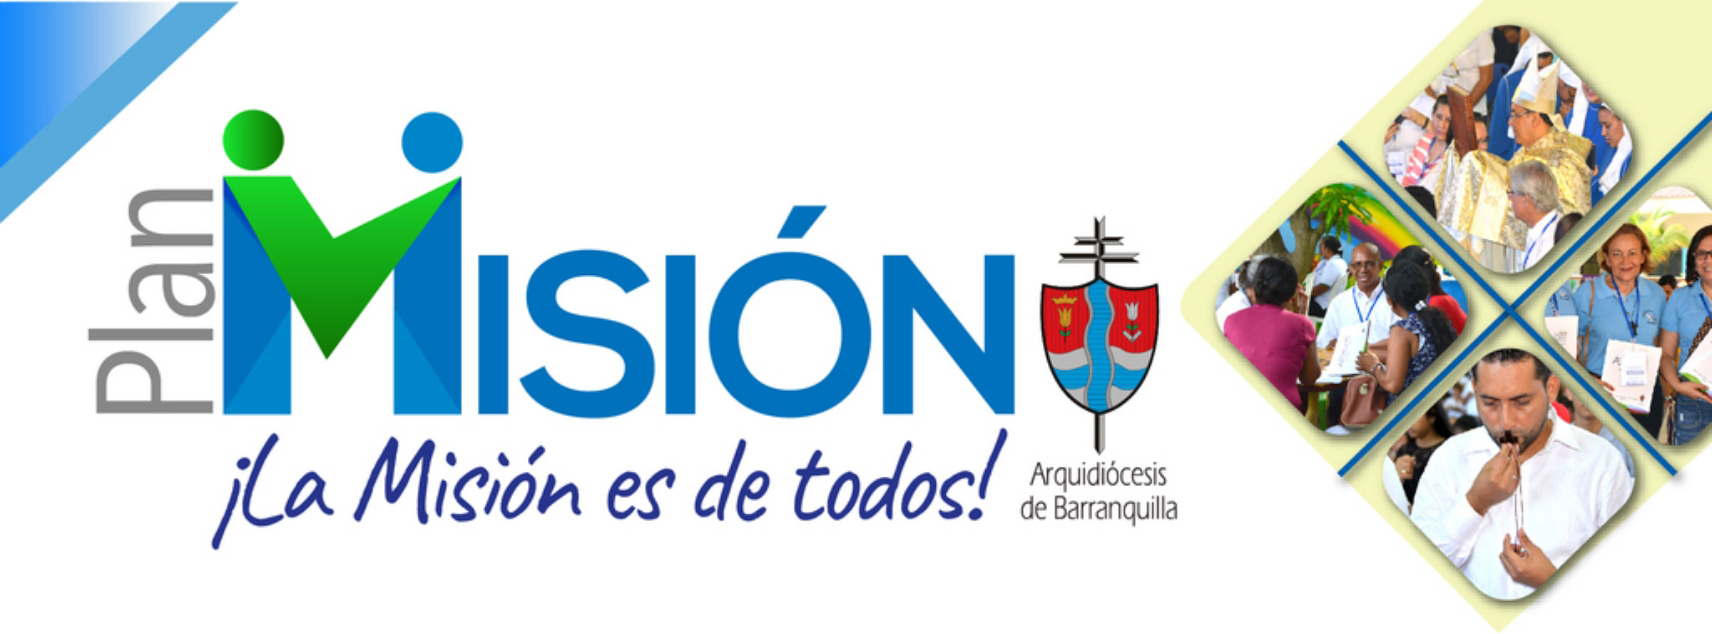 Arquidiocesis_Home_Plan_mision